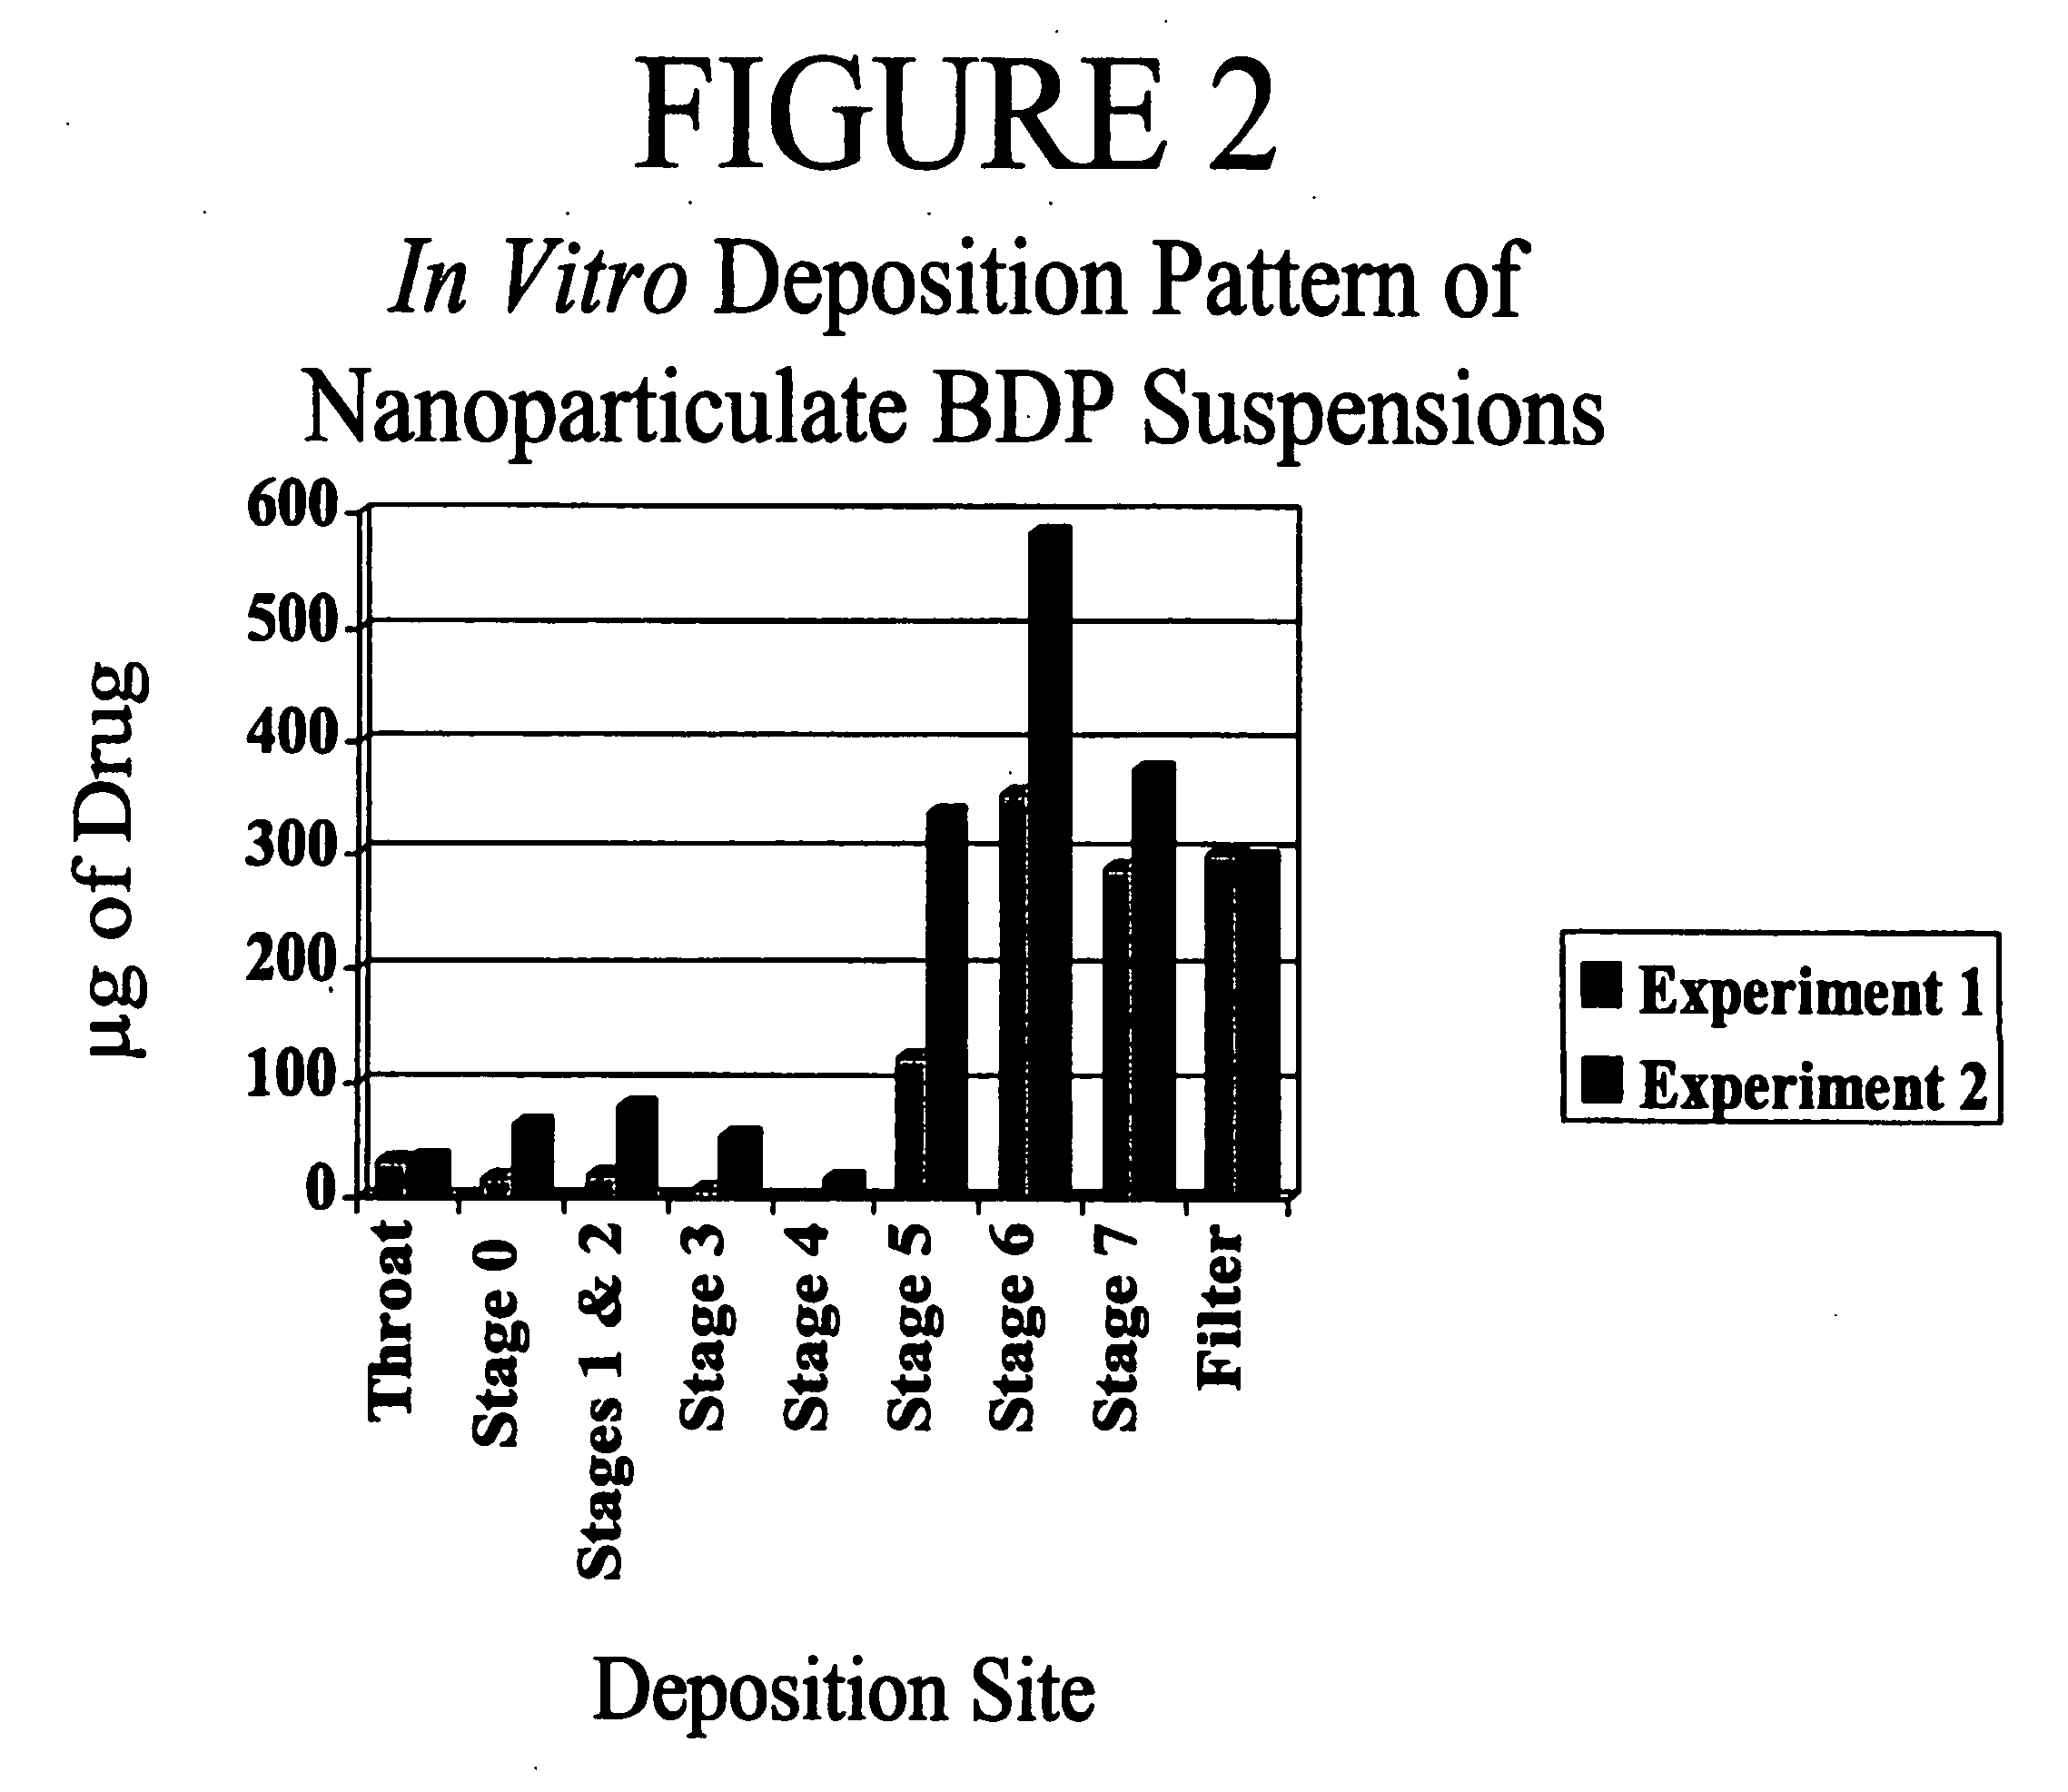 Dry powder aerosols of Nanoparticulate drugs